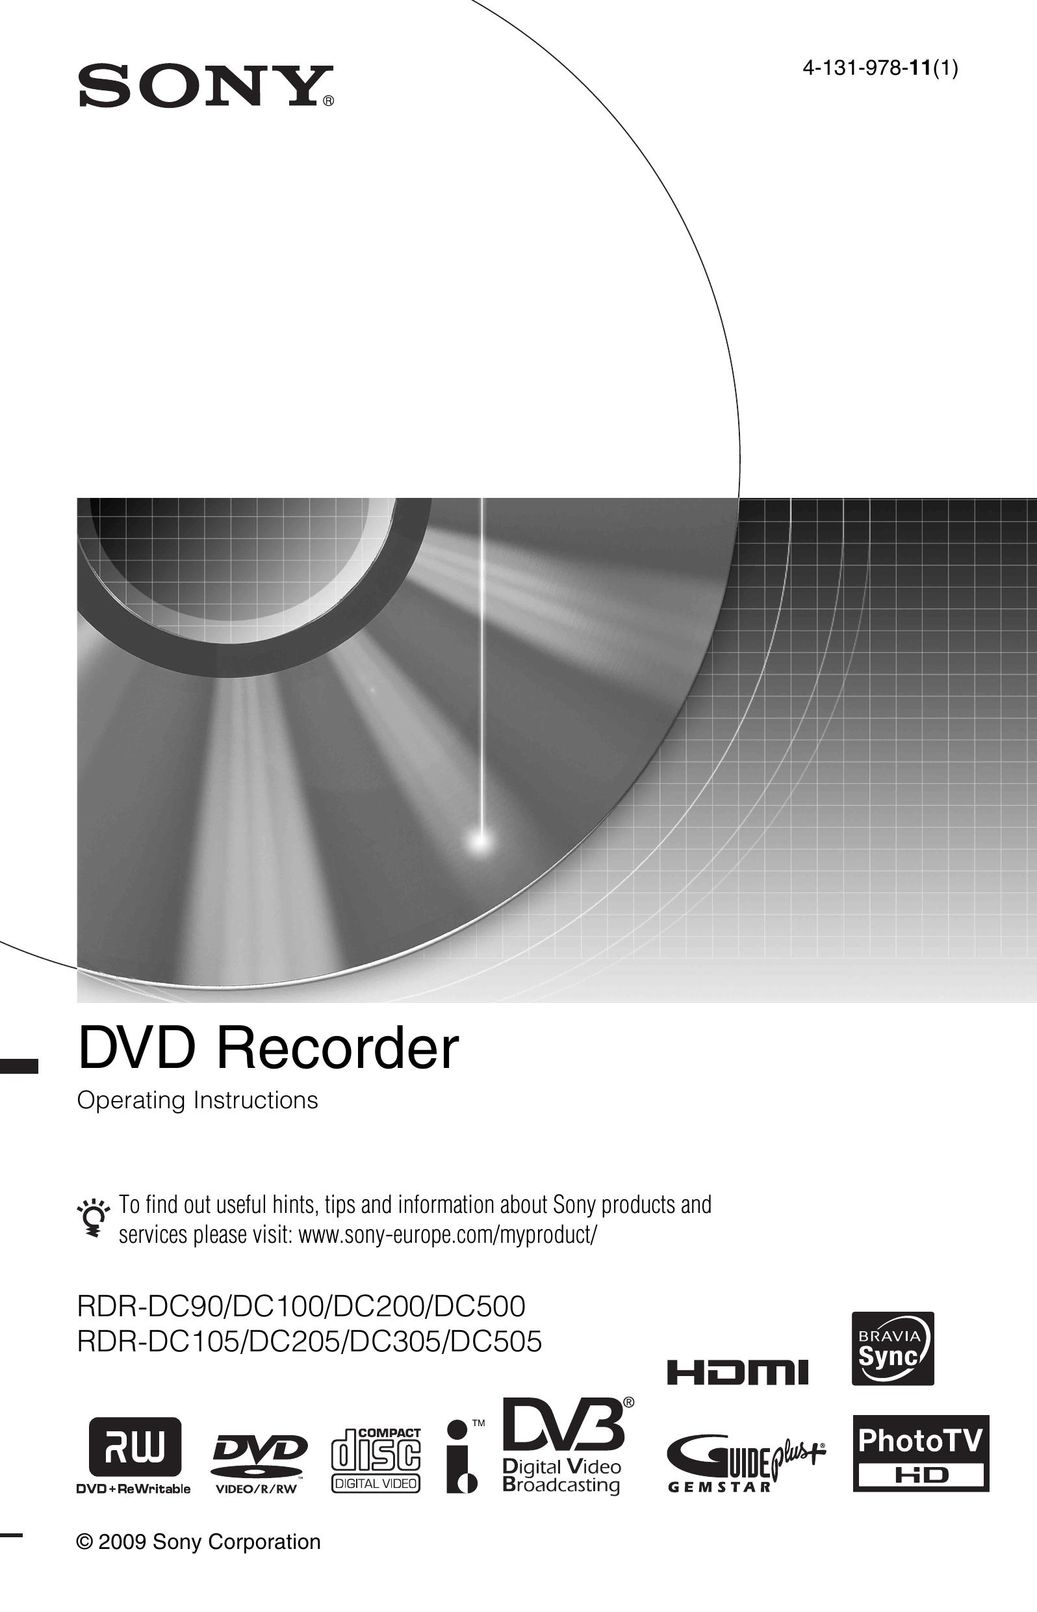 Sony RDR-DC100 DVD Recorder User Manual